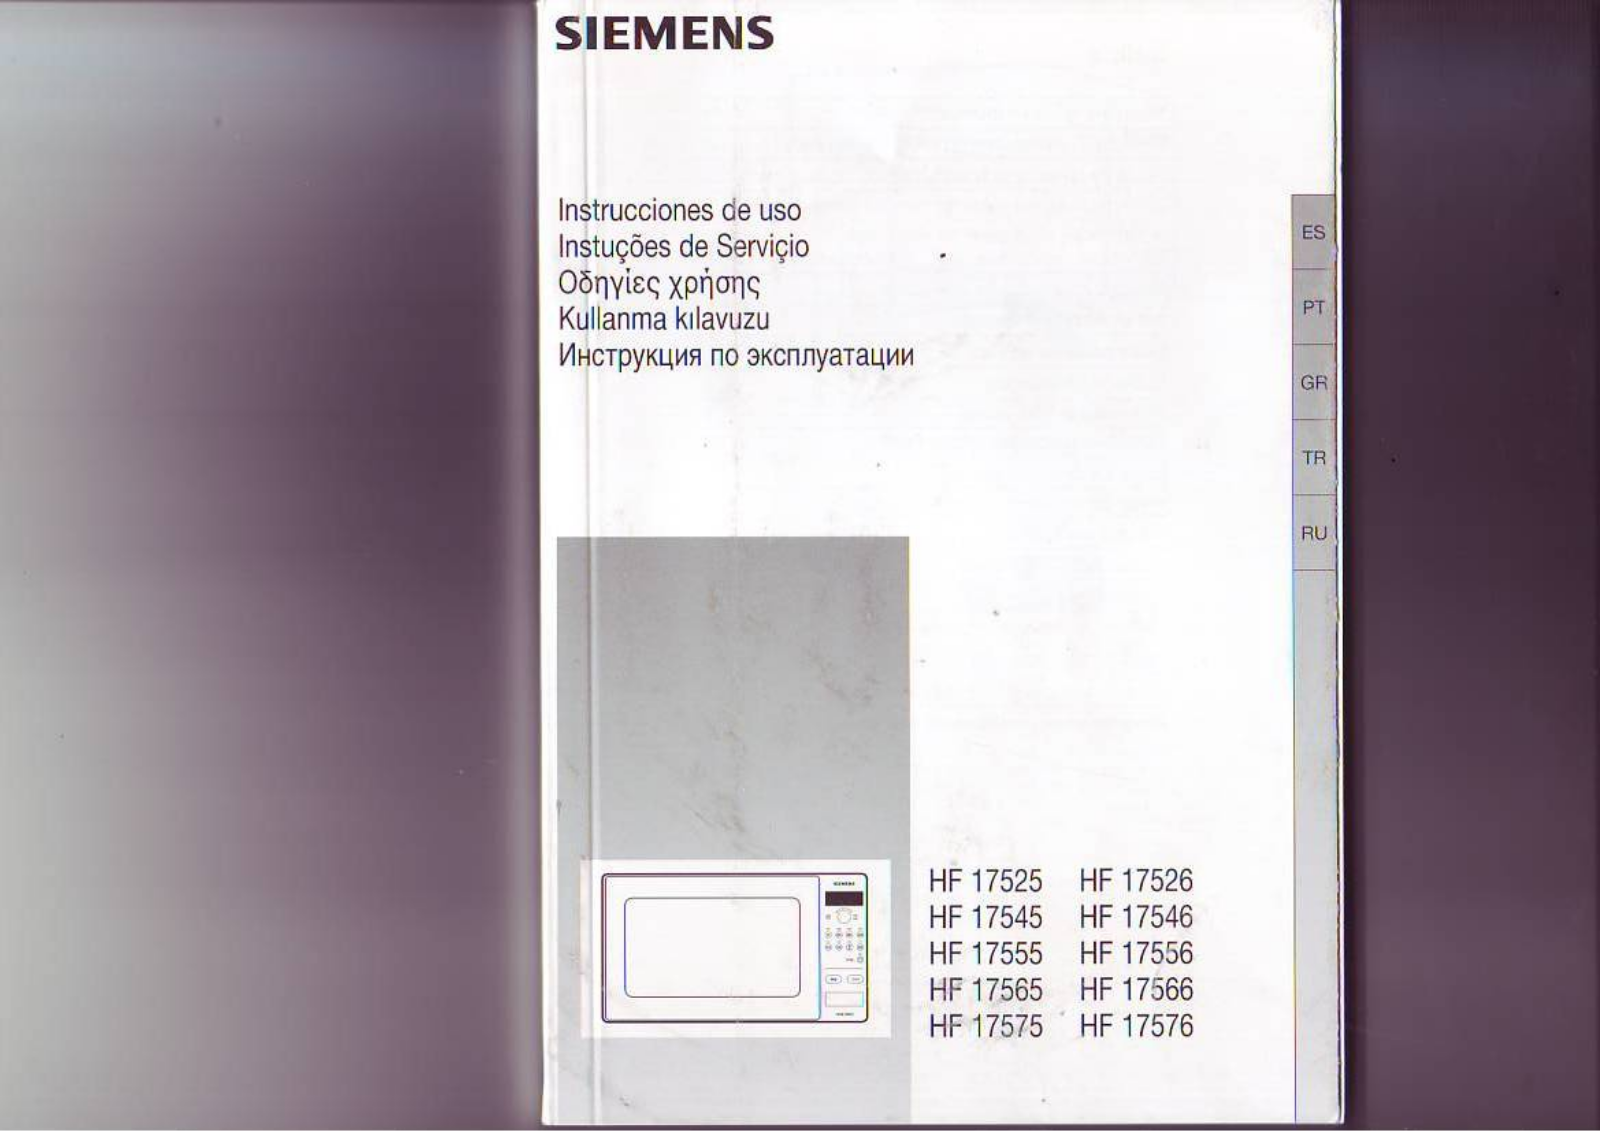 Siemens HF 17576 User Manual